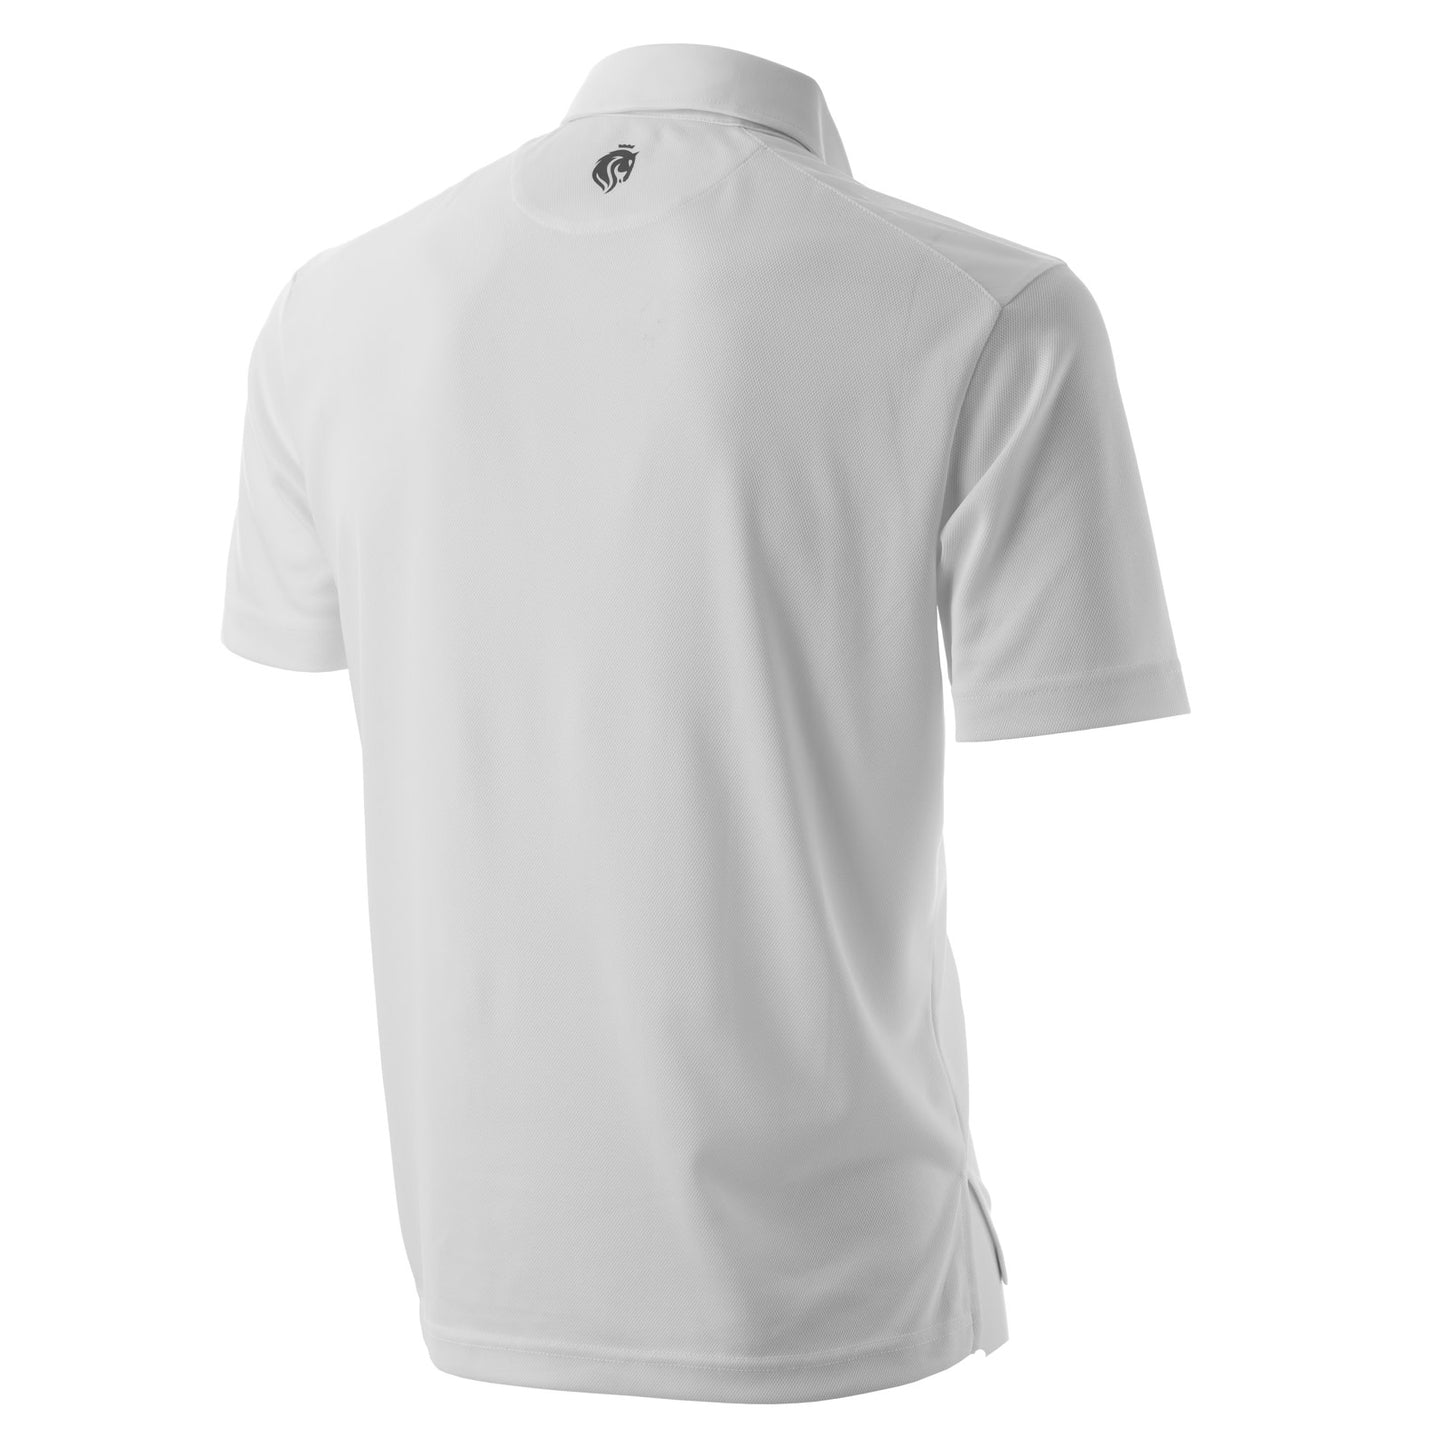 Camiseta Polo de Concurso Equinavia para Hombre - Blanca